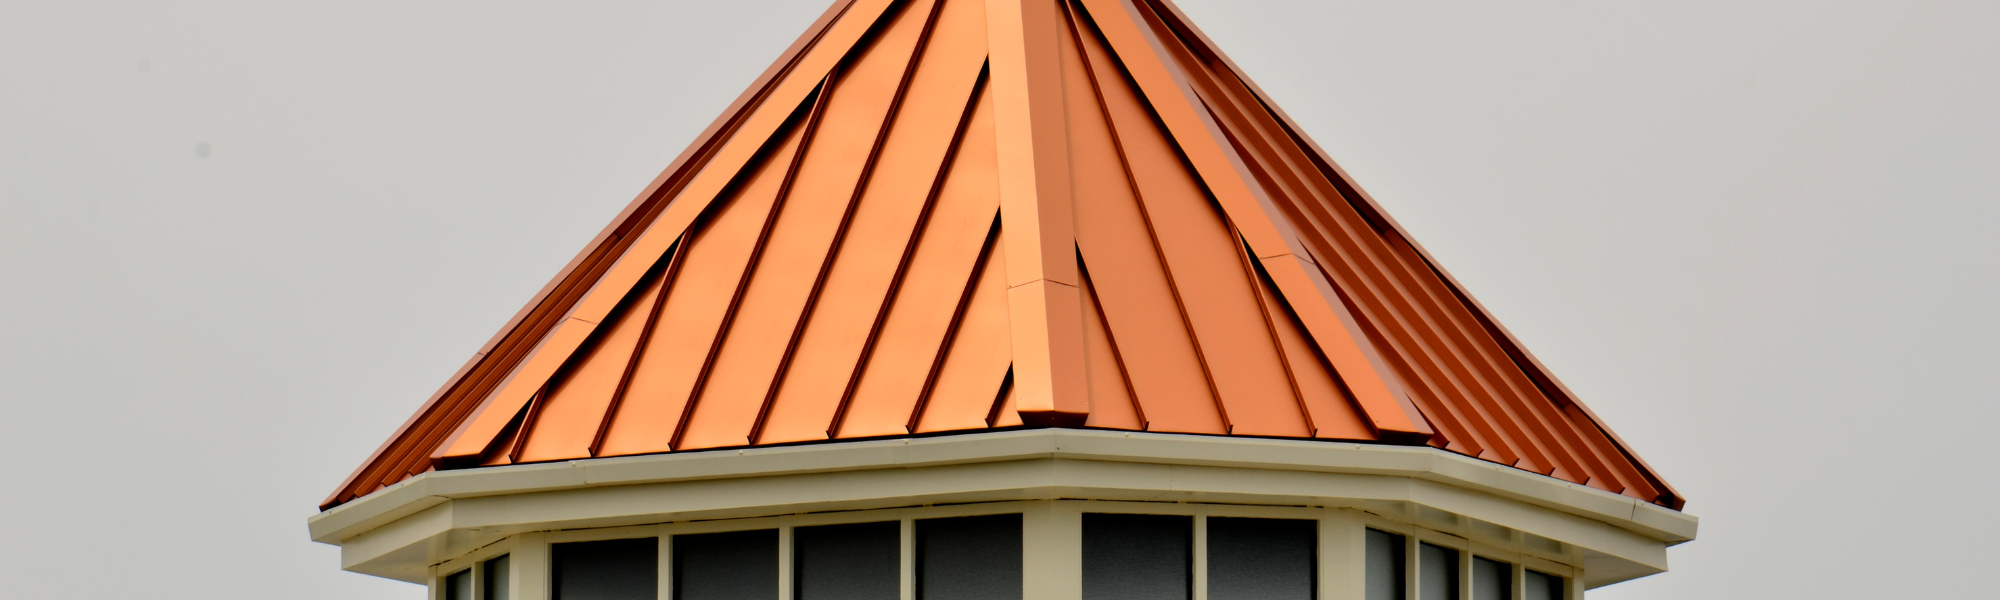 Copper Roofing in Destin